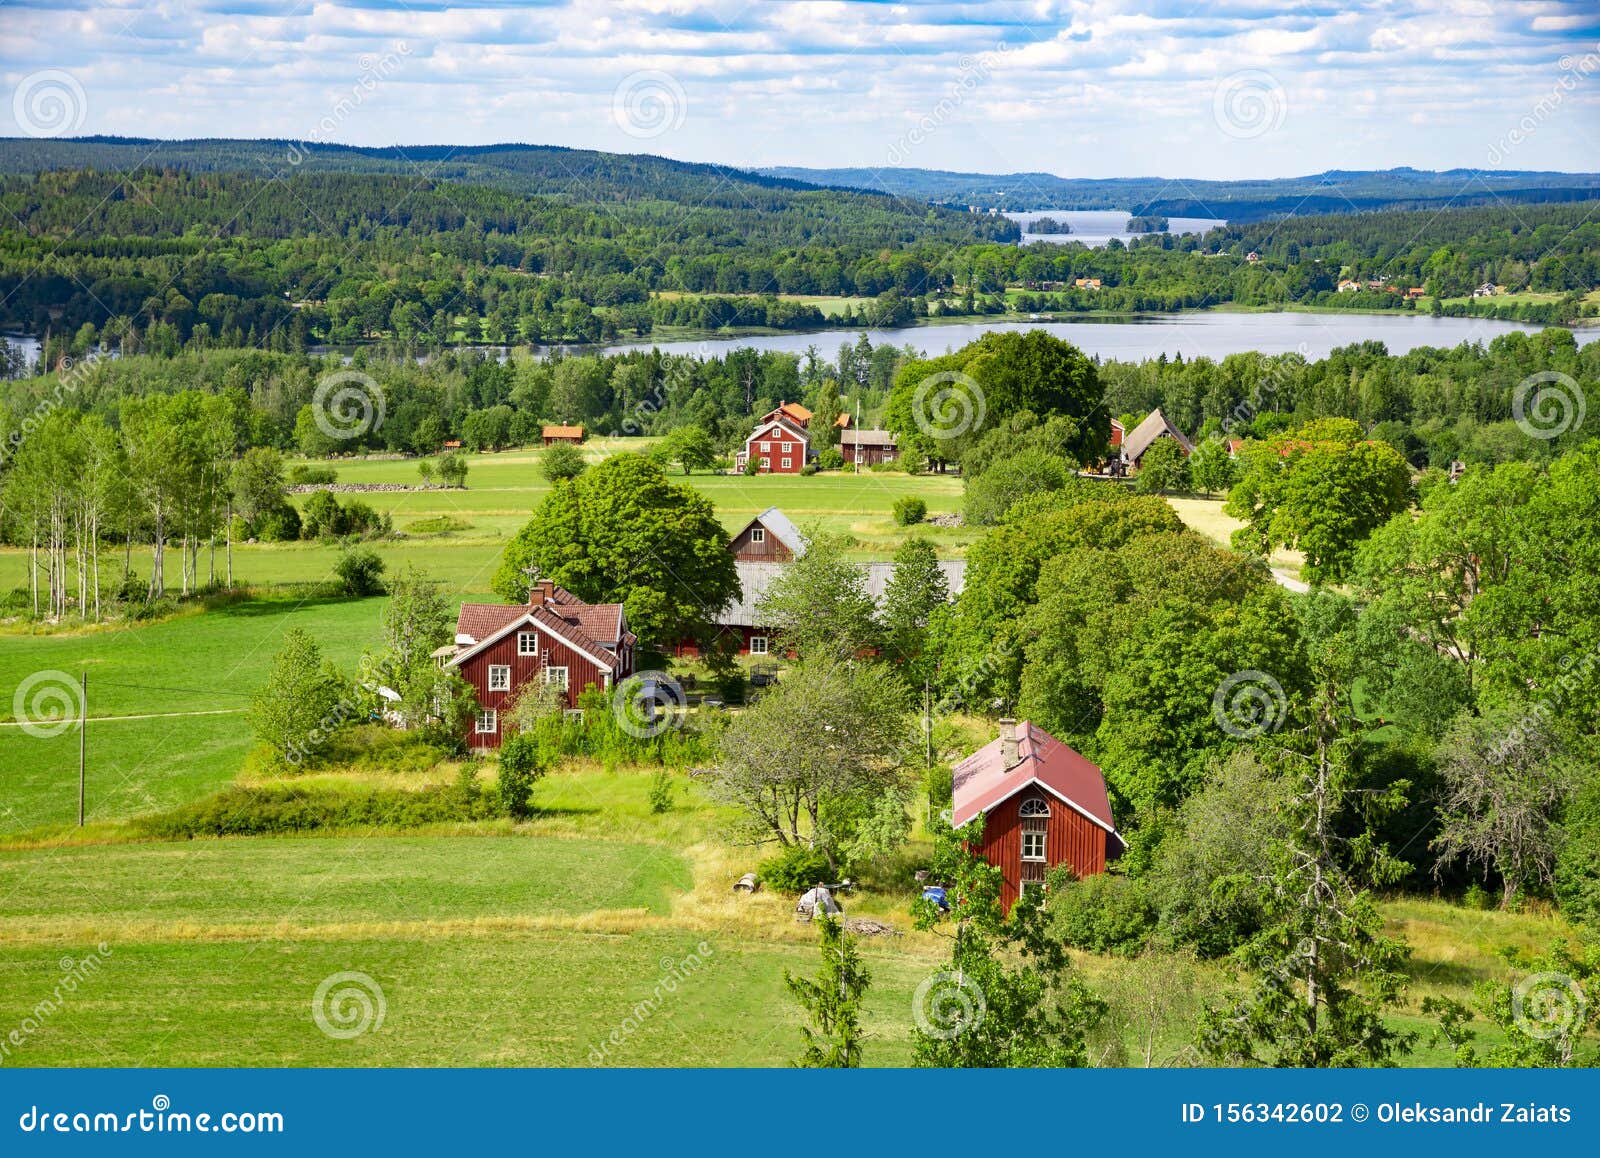 Sweden Rural Areas